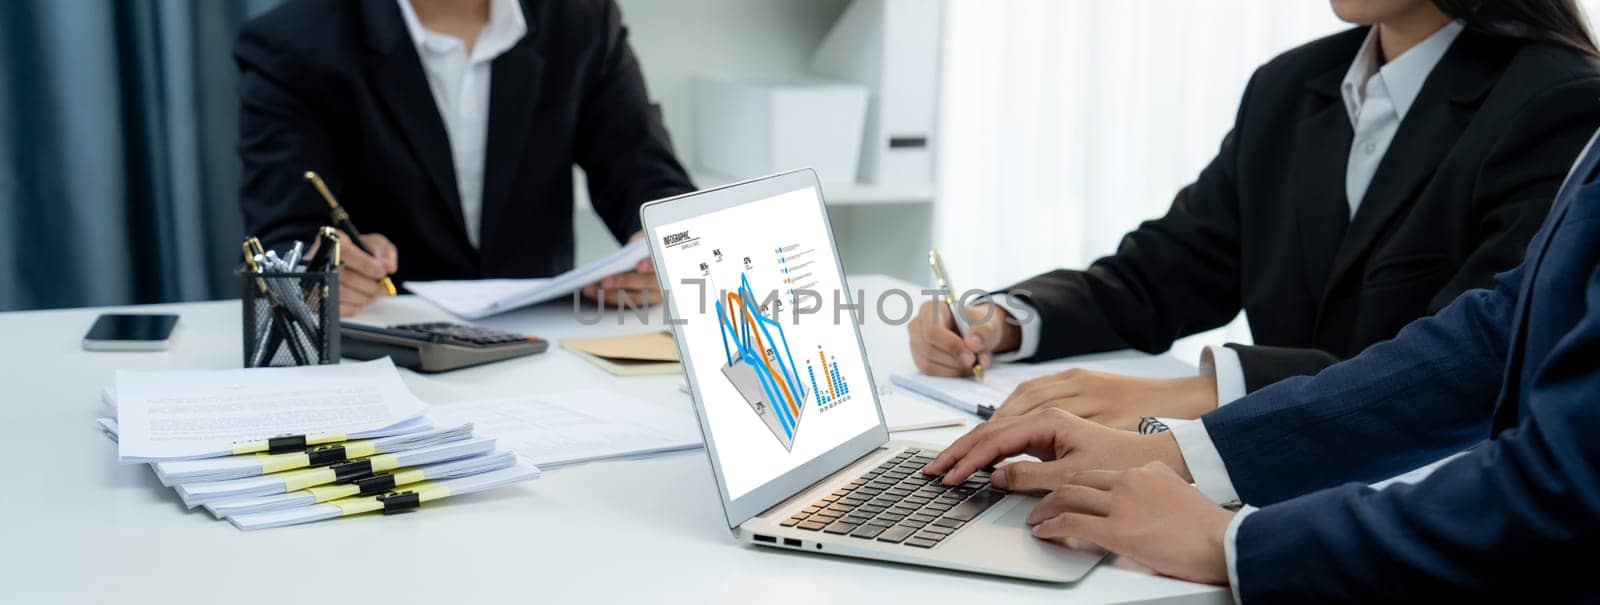 Business intelligence analyst use BI software on laptop. Shrewd by biancoblue